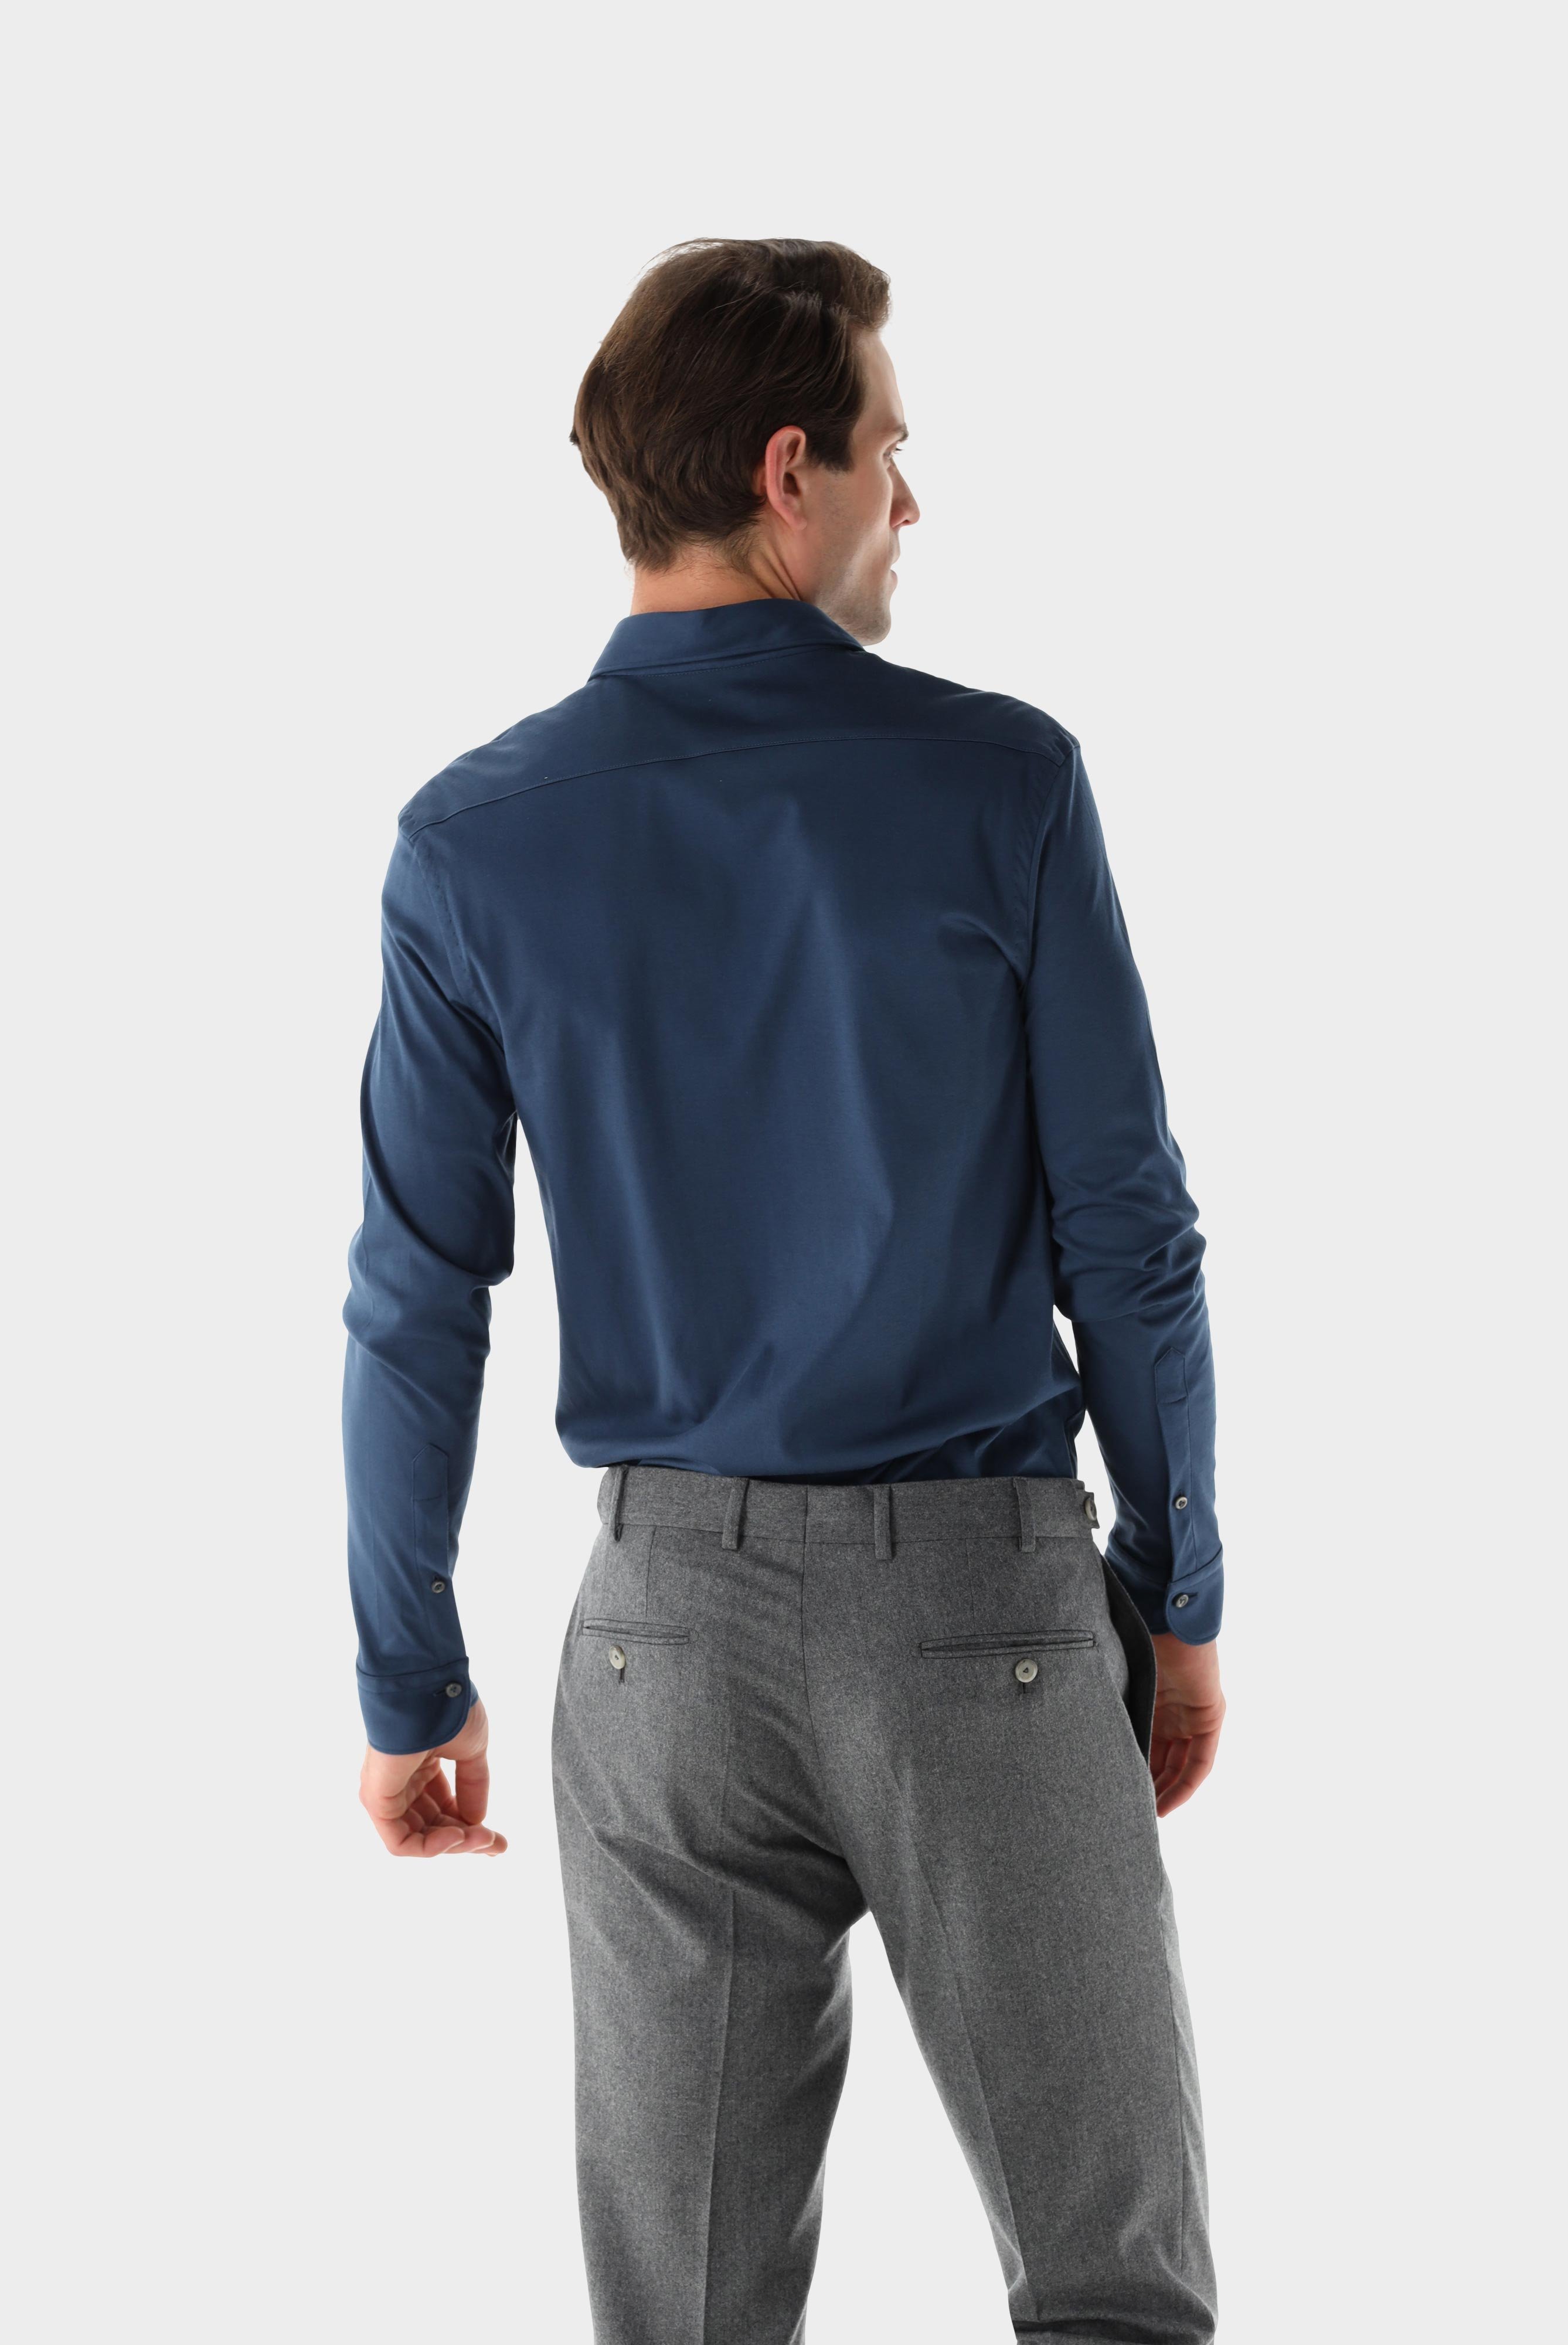 Casual Hemden+Jersey Hemd aus Schweizer Baumwolle Tailor Fit+20.1683.UC.180031.780.S